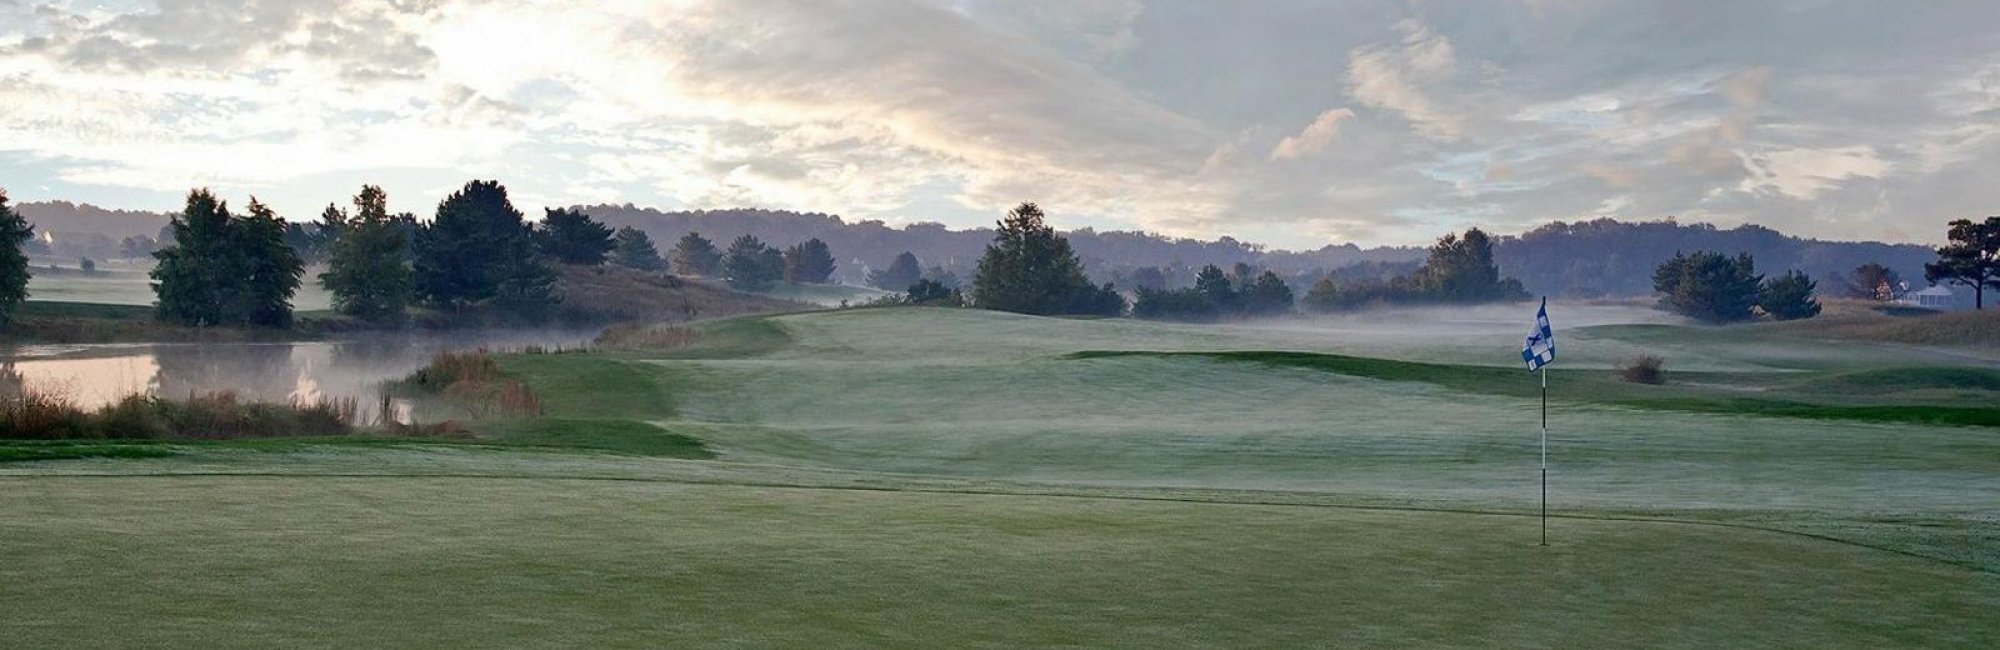 foggy golf course at sunrise